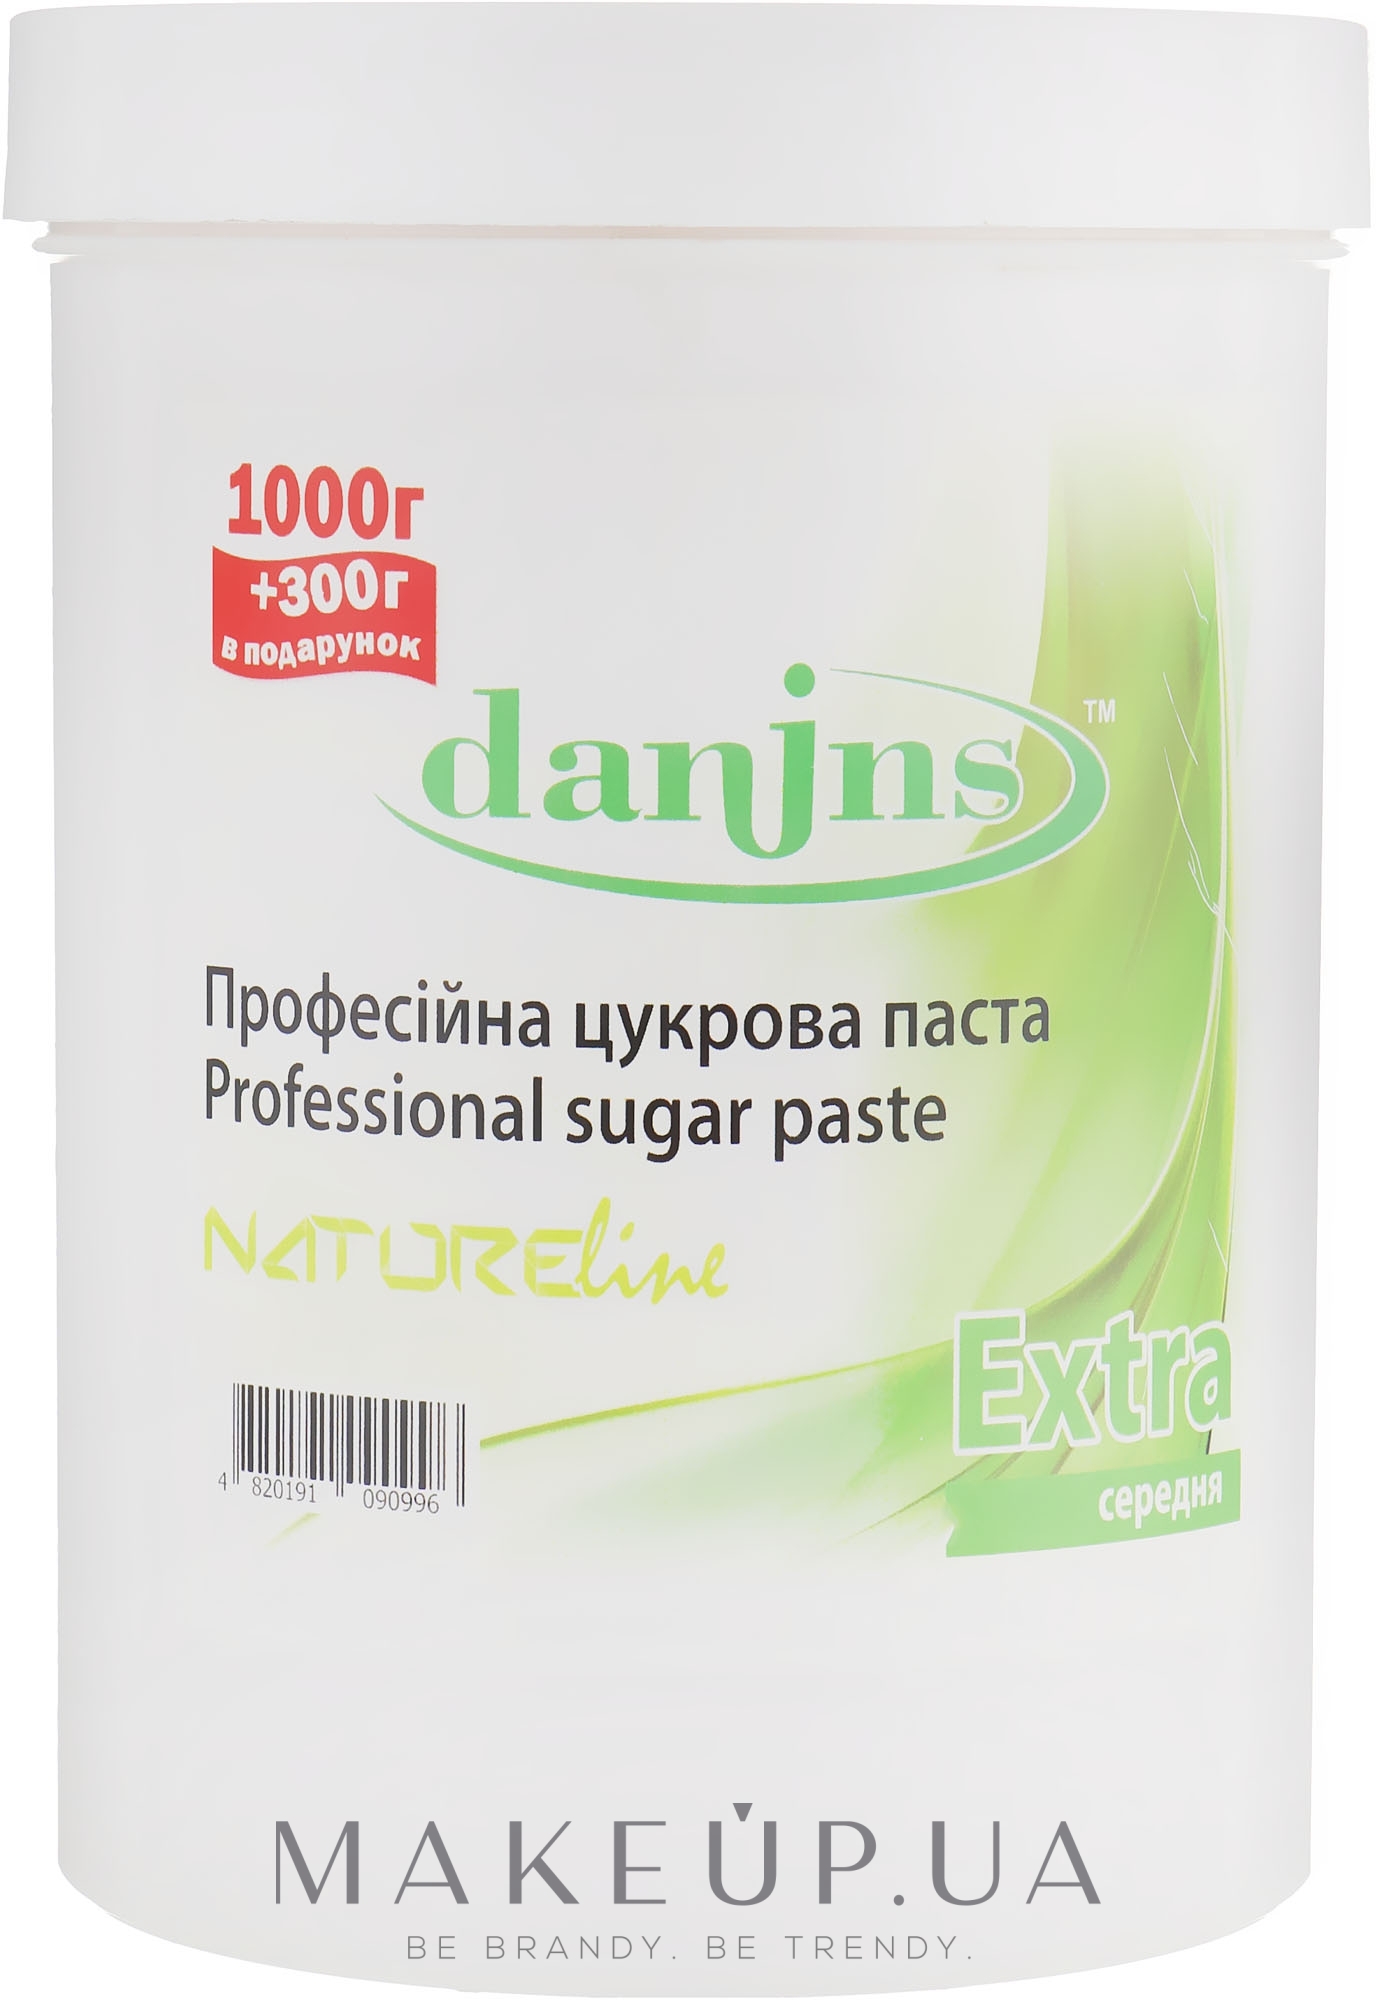 Цукрова паста для депіляції "Средня" - Danins Professional Sugar Paste Extra — фото 1300g